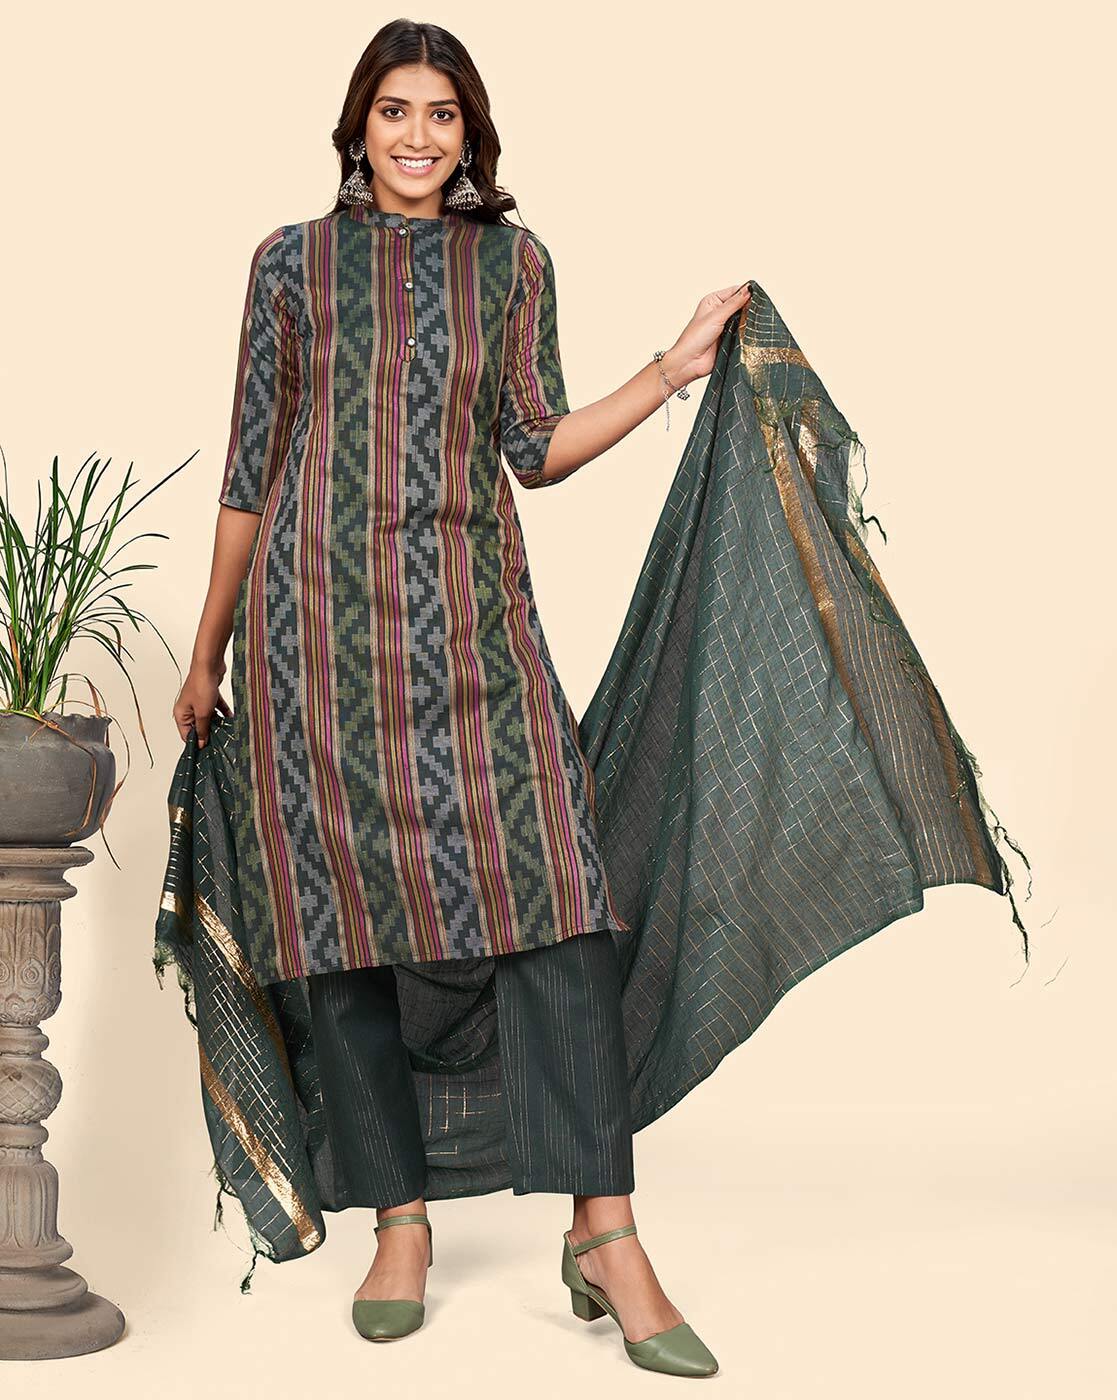 101063 Sambalpuri Handloom Cotton Stiching Kurti - 40 Chest at Rs 1600 |  Pure Cotton Handloom Kurti, हथकरधे की सूती कुर्ती - Priya Fashion, Balangir  | ID: 2851774474591